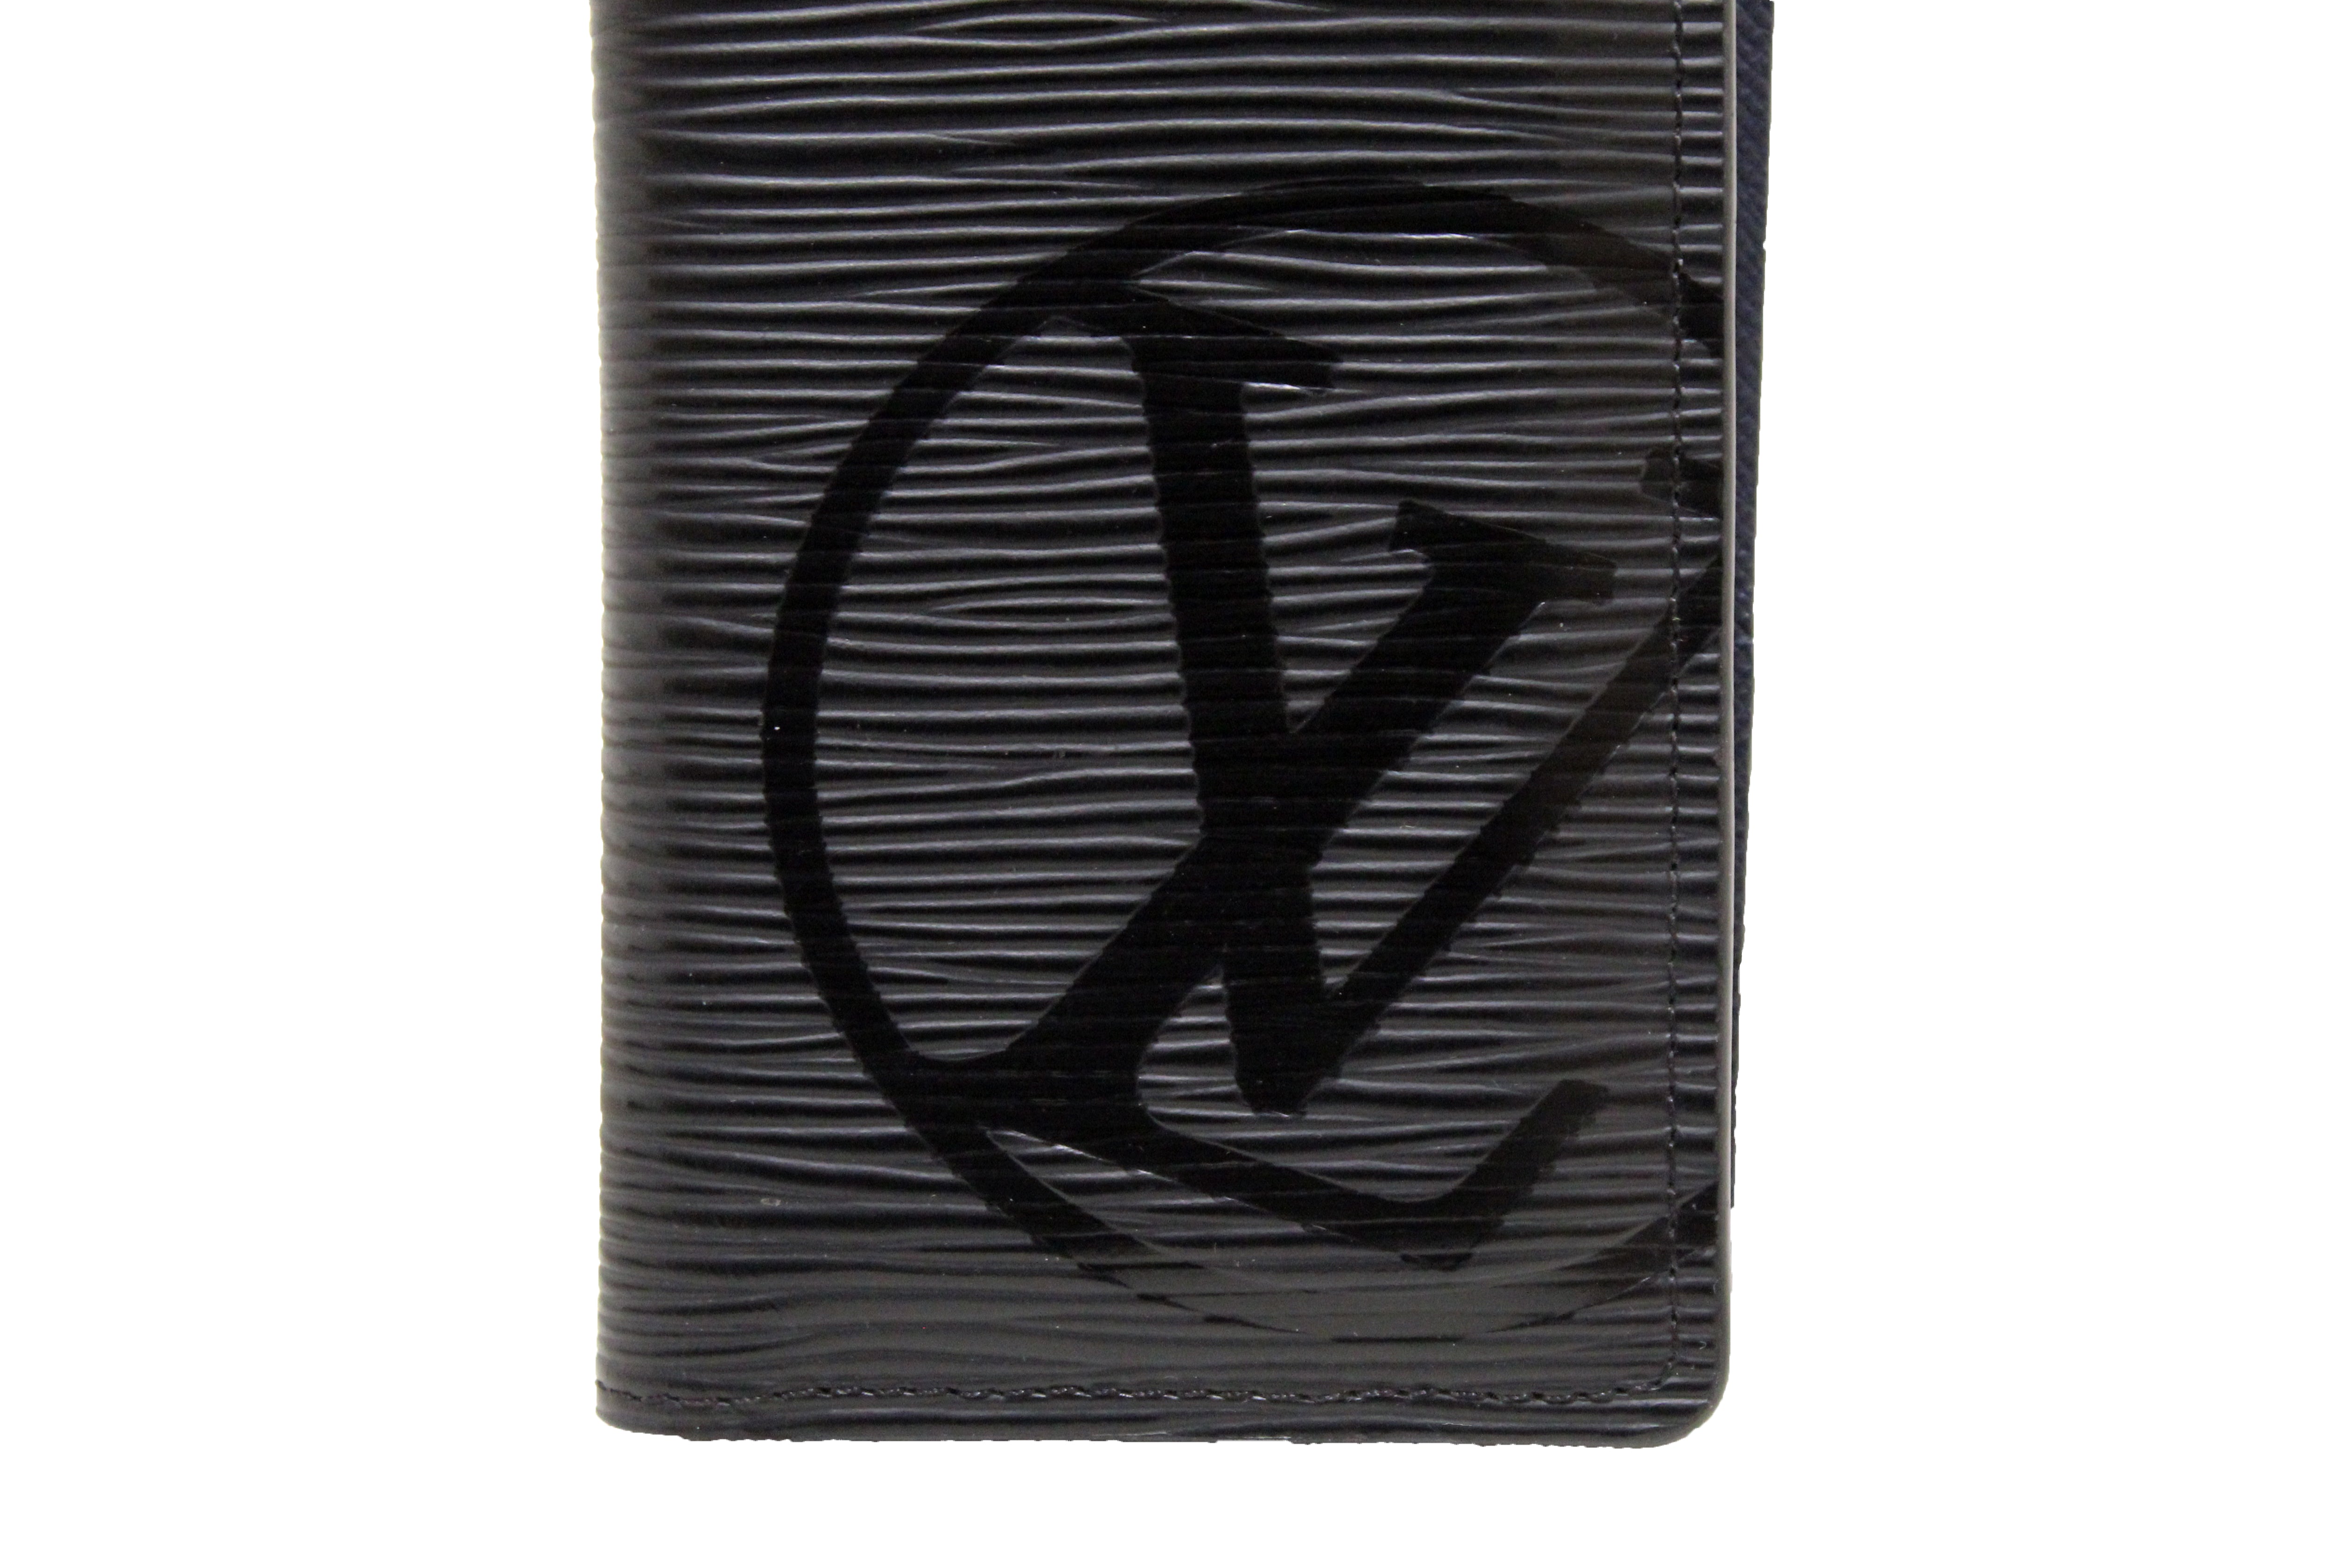 Louis Vuitton Pocket Organizer Black EPI